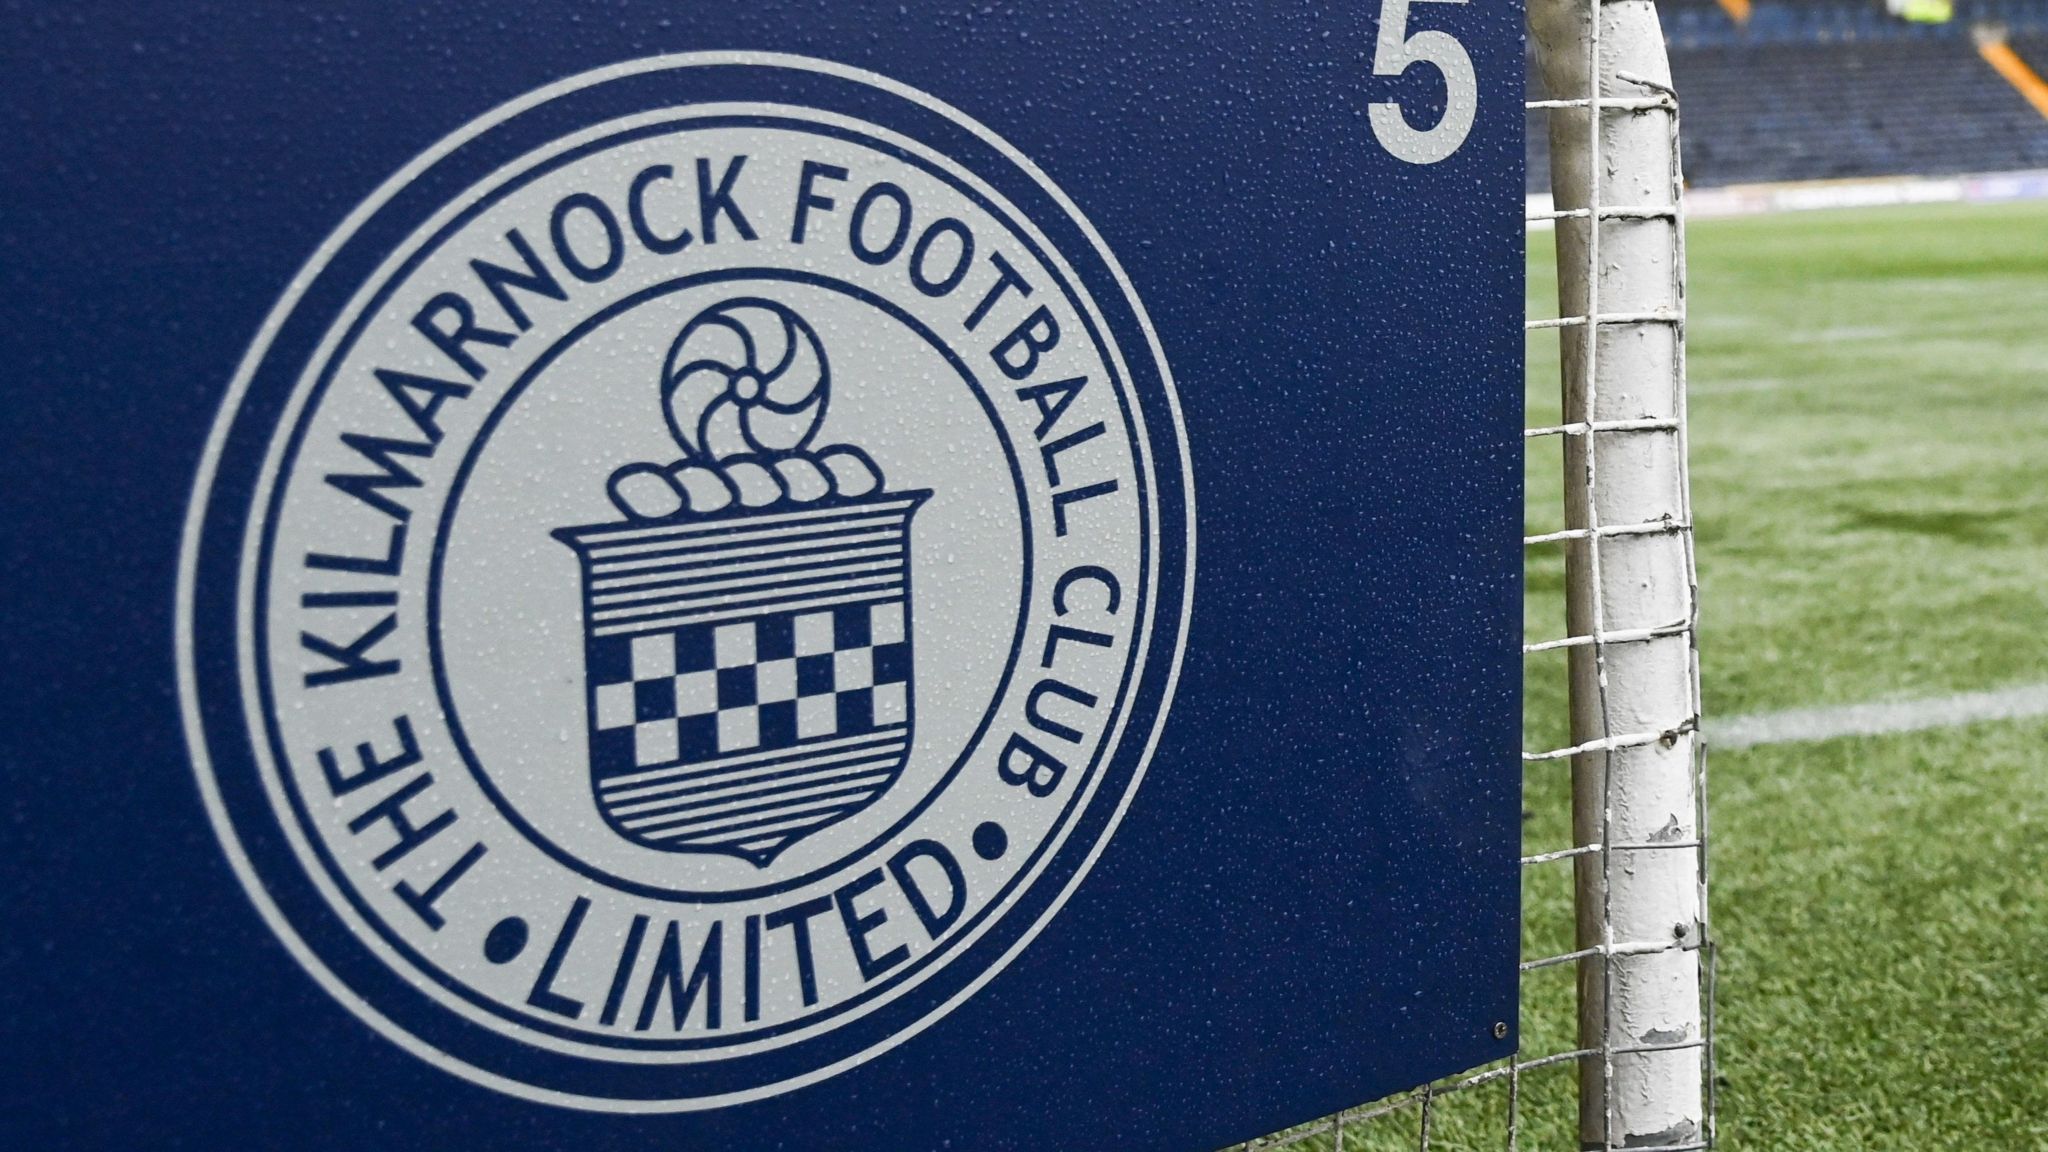 Kilmarnock badge on fence